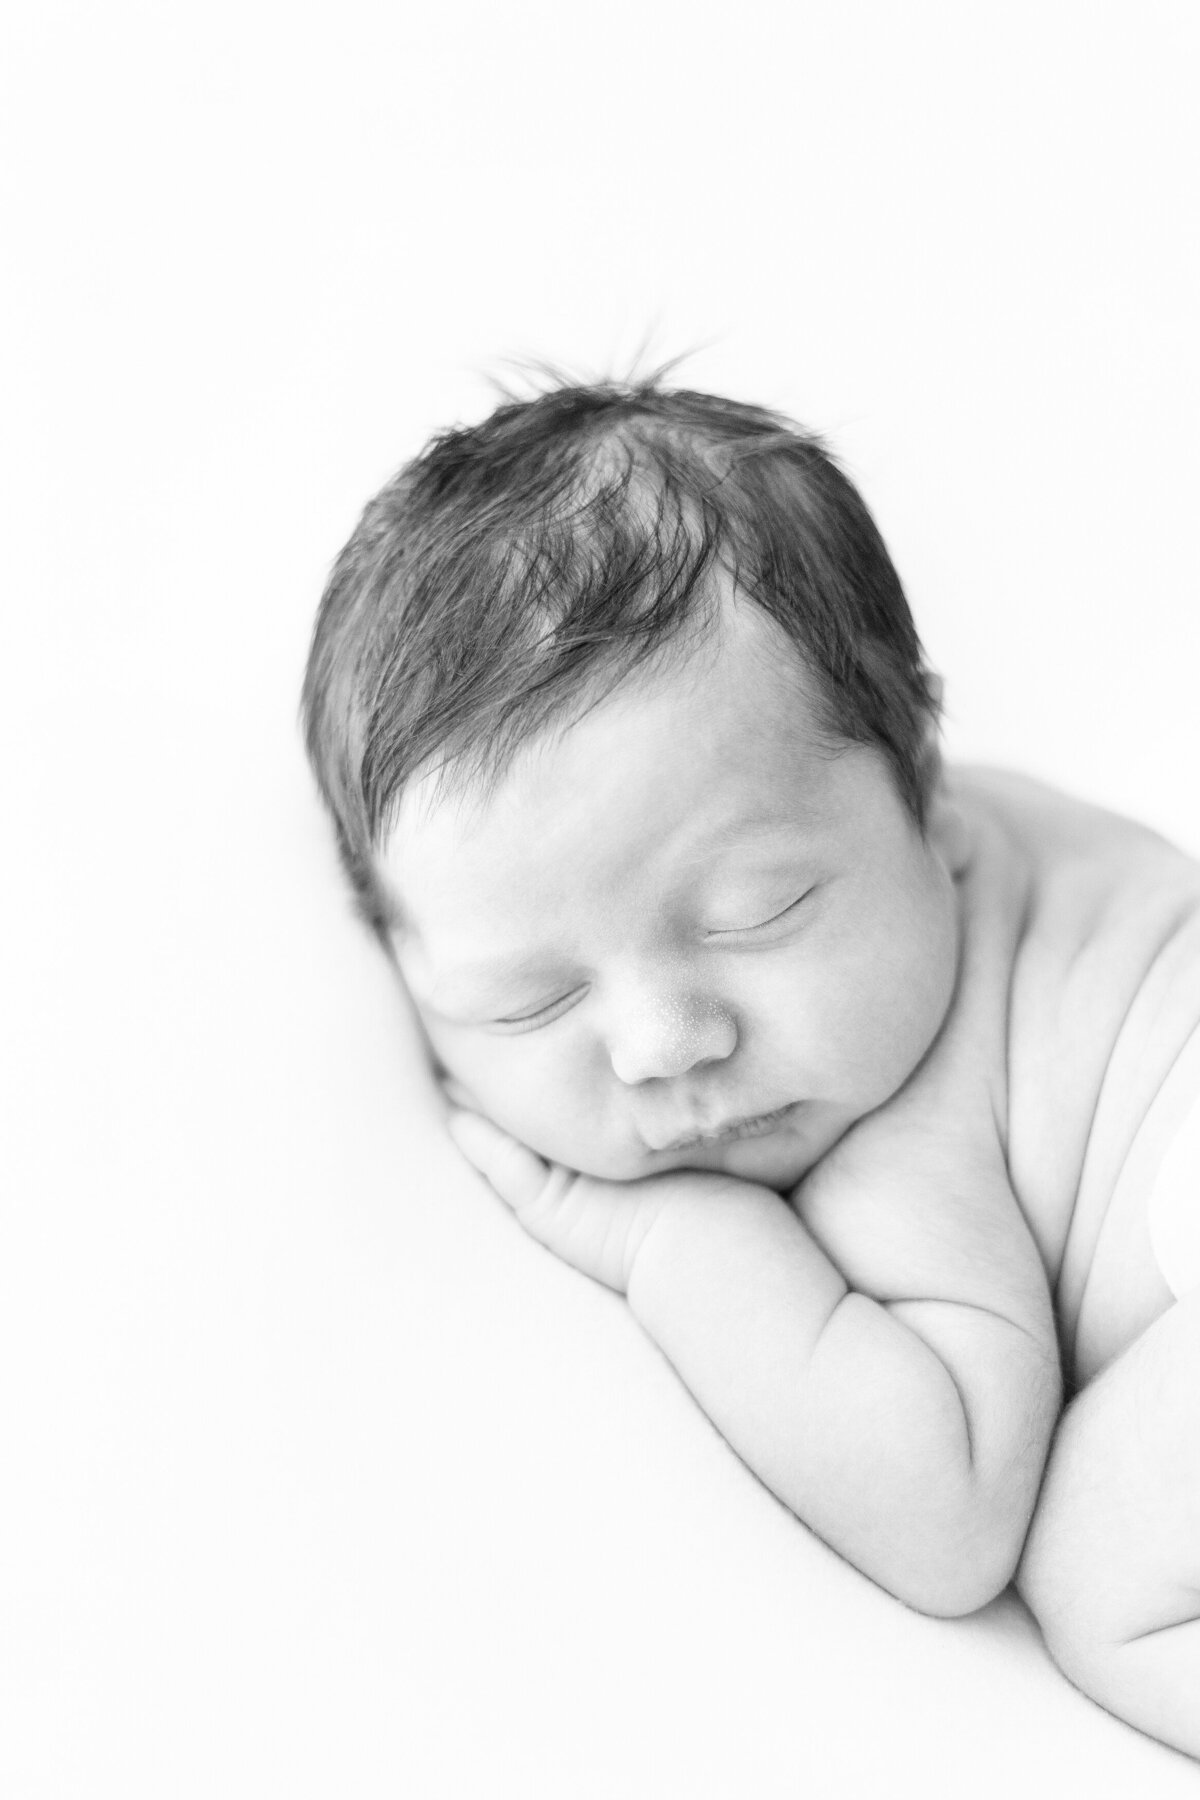 jacksonville-newborn-photographer-183